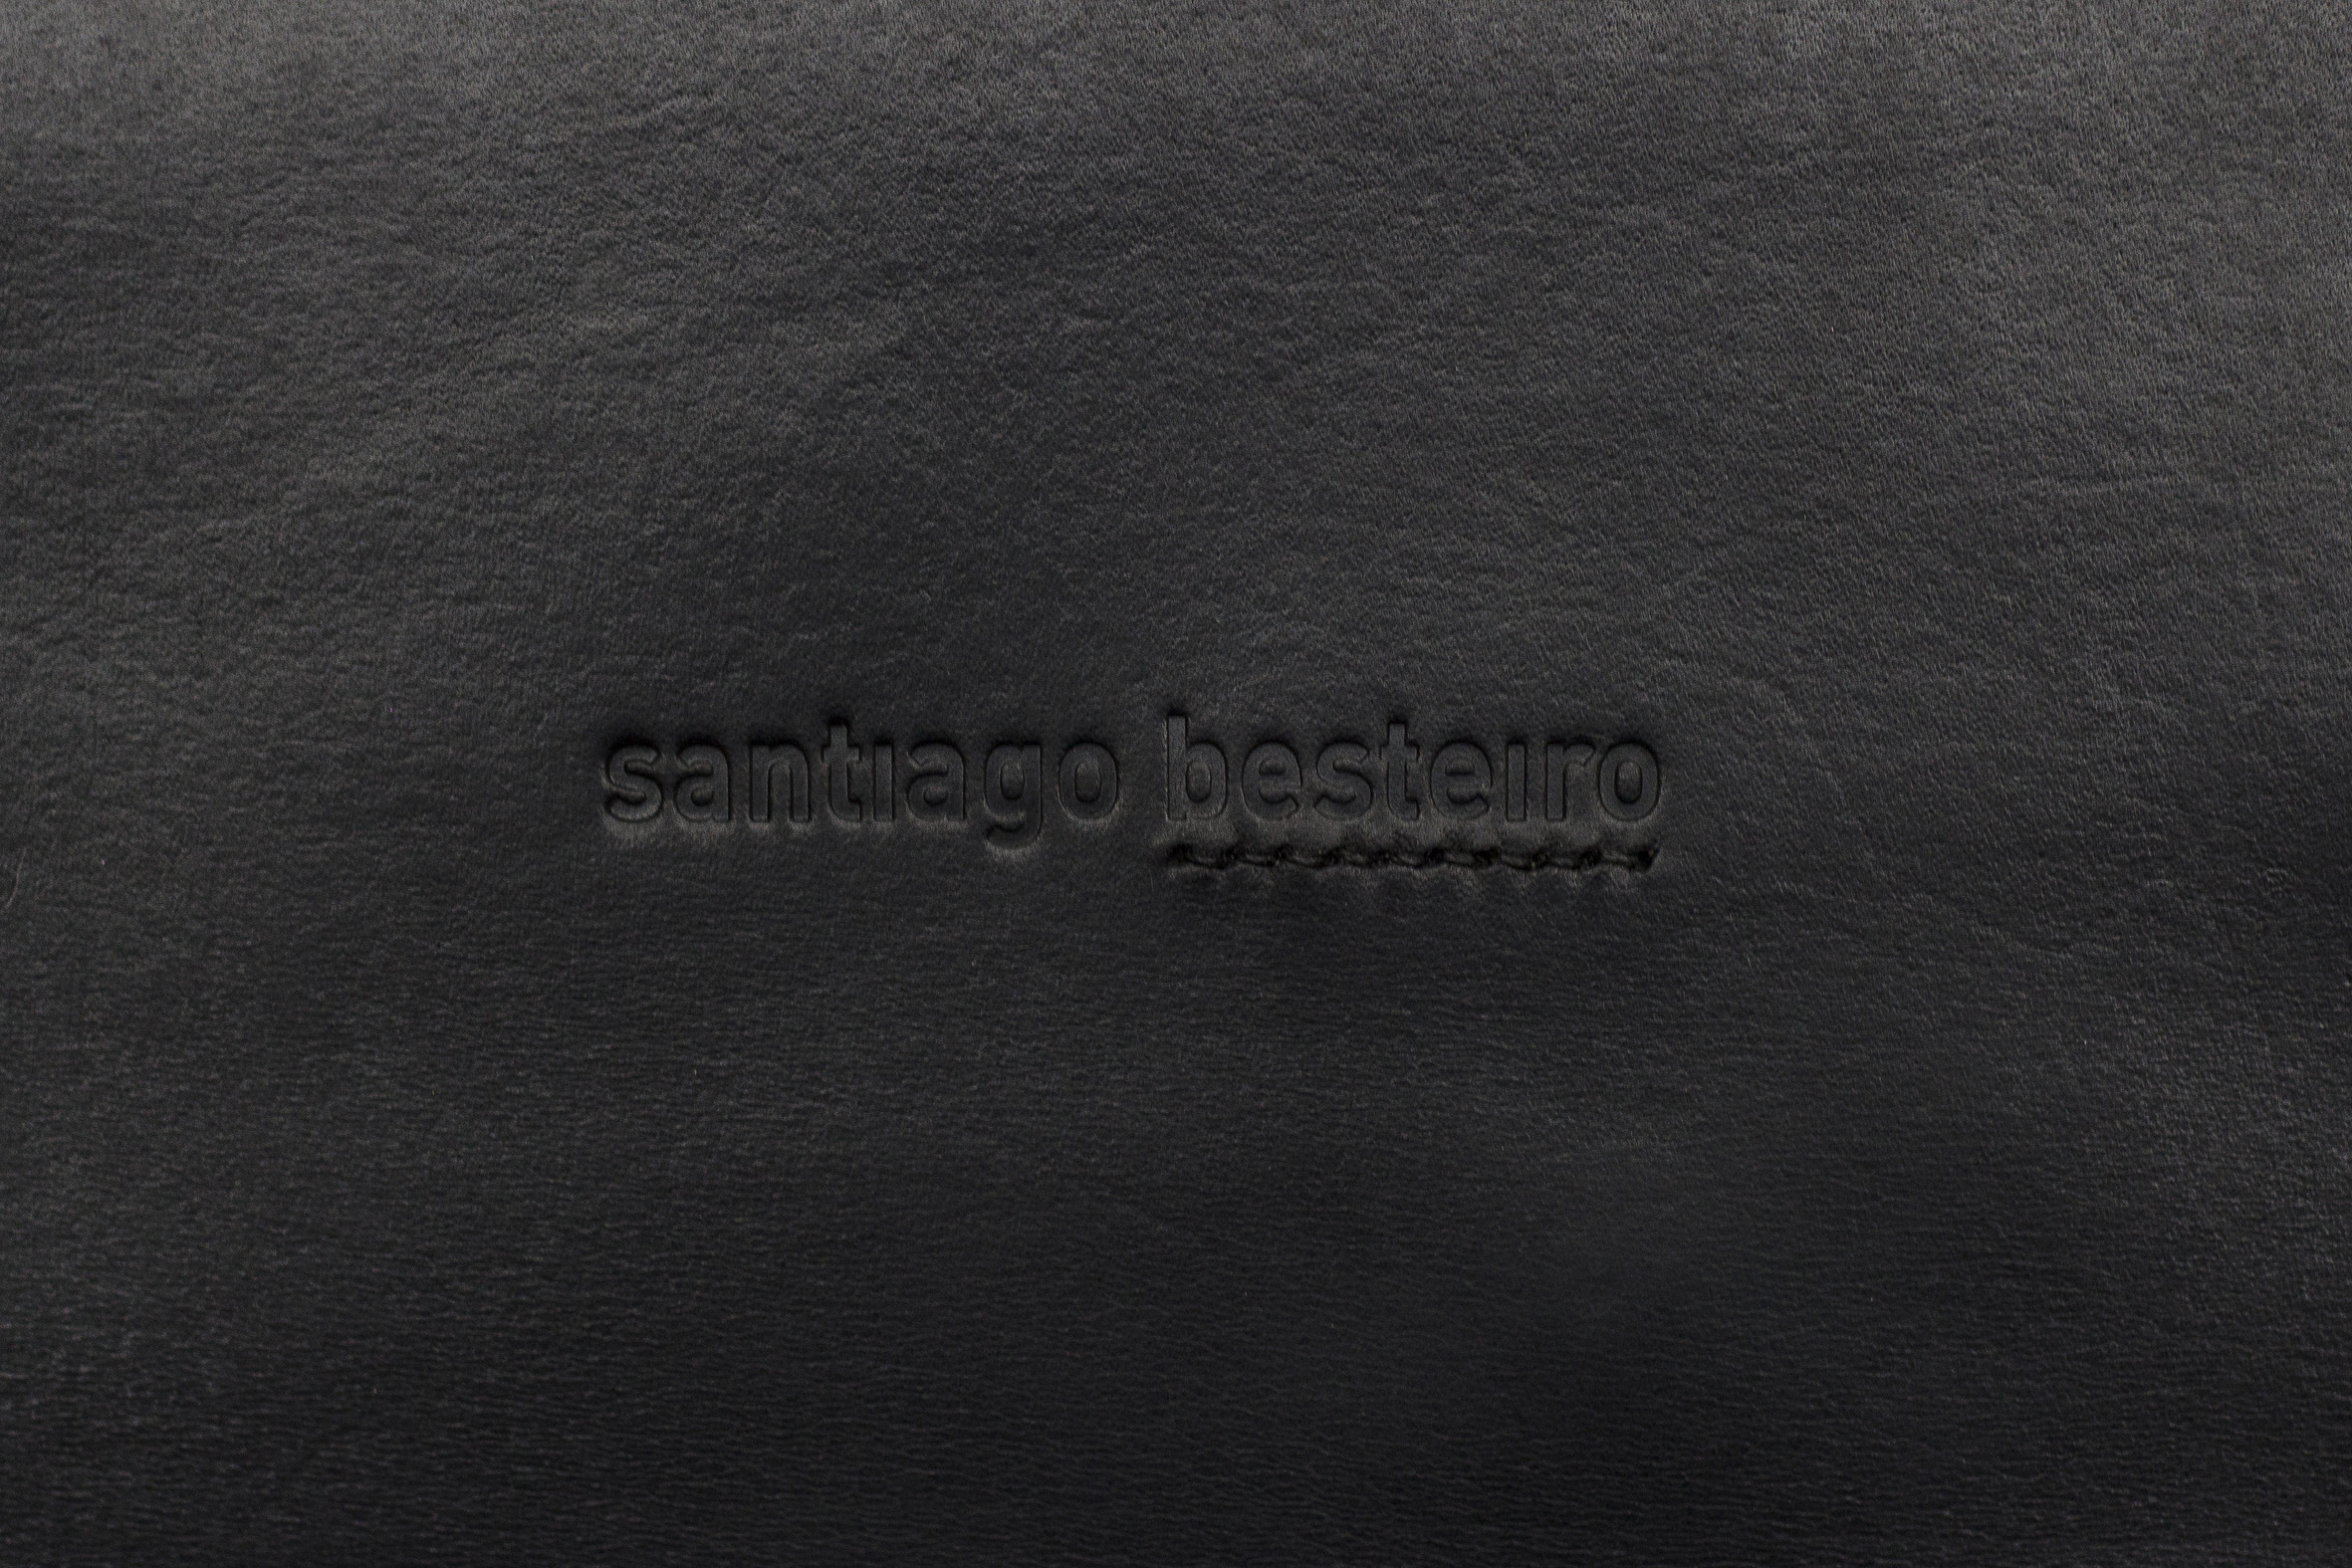 Logo Santiago Besteiro by Xosé teiga, studio. - Creative Work